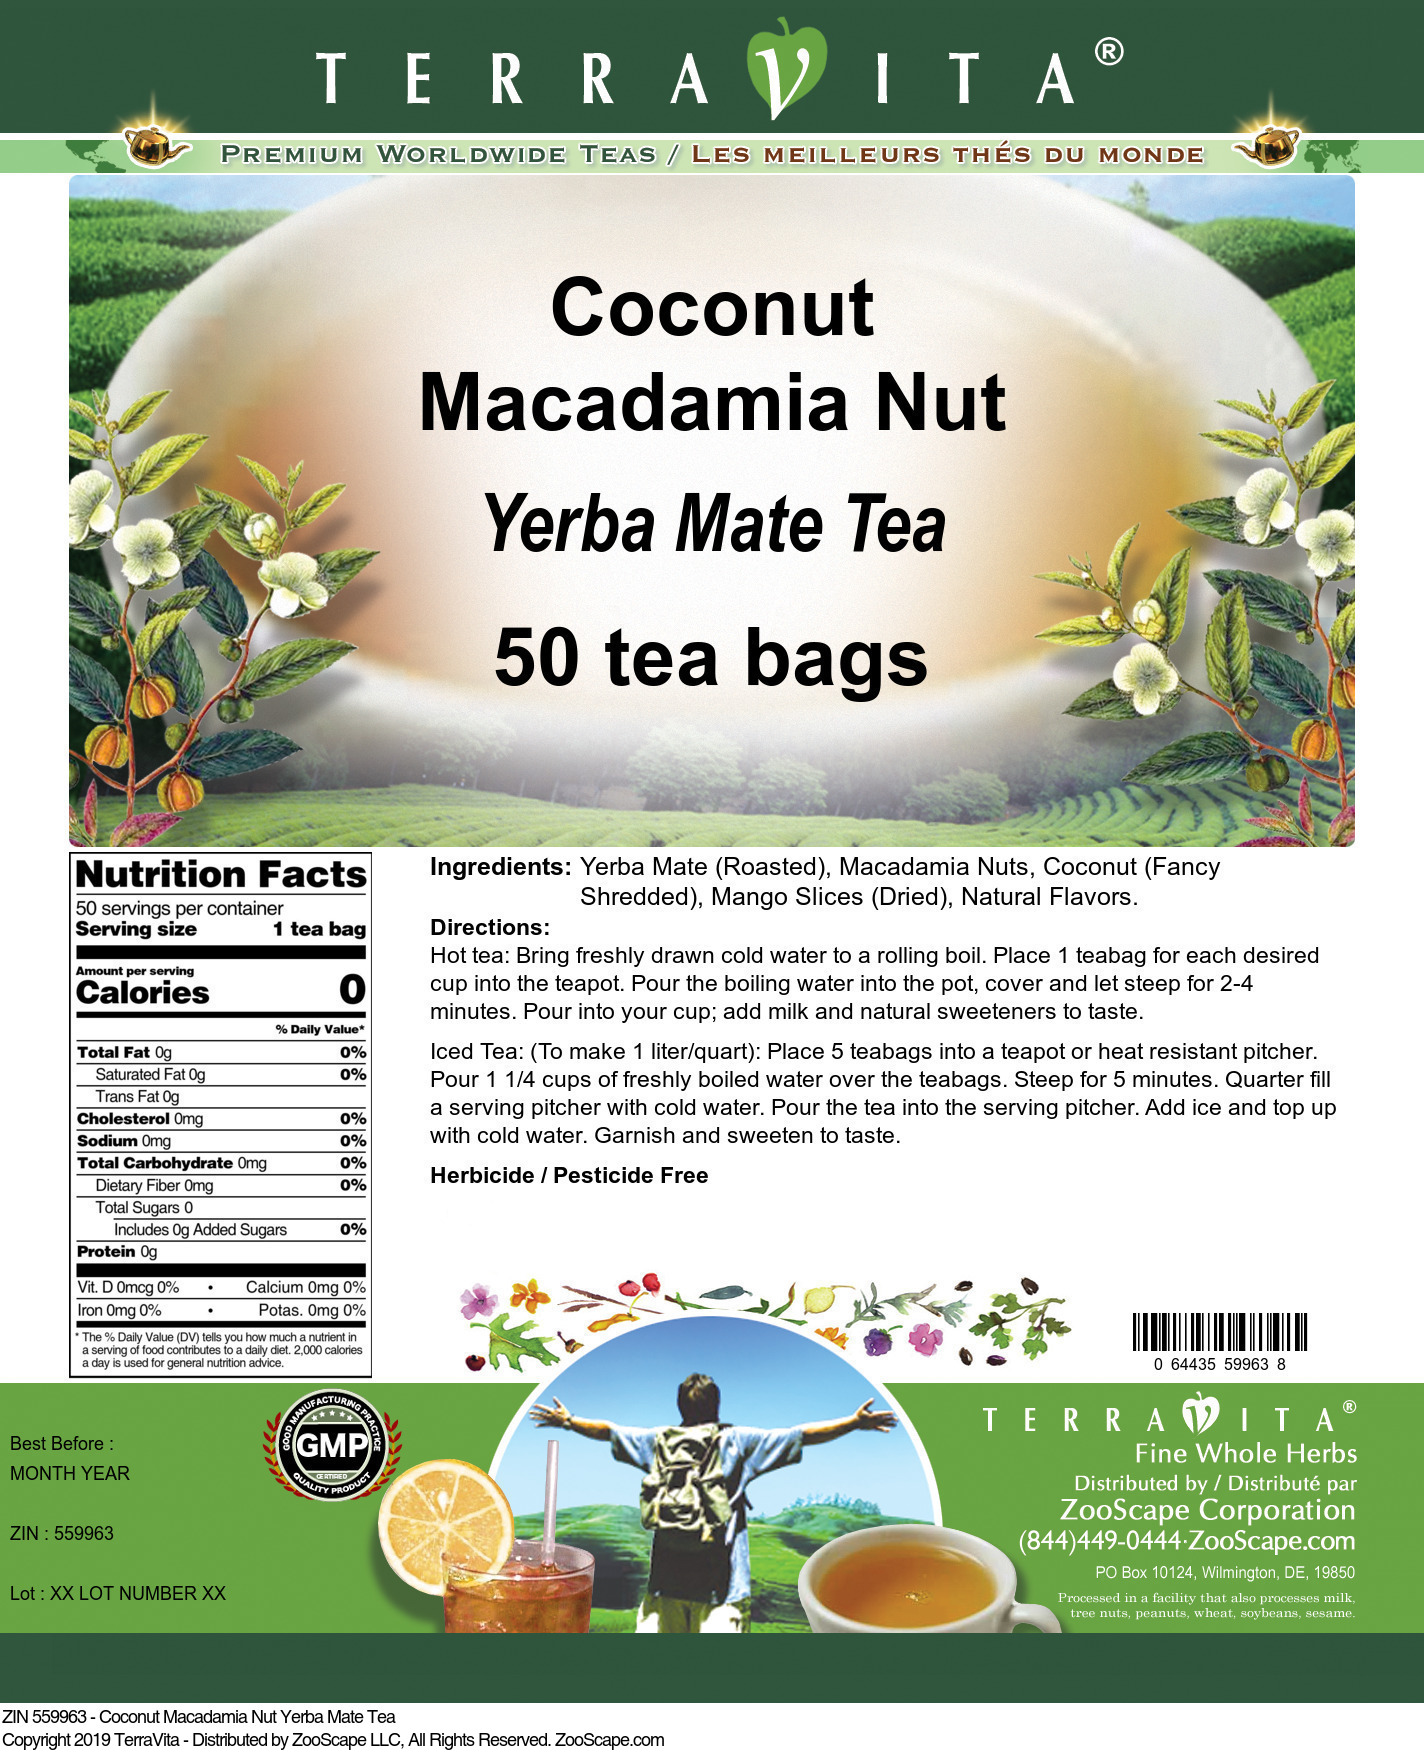 Coconut Macadamia Nut Yerba Mate Tea - Label